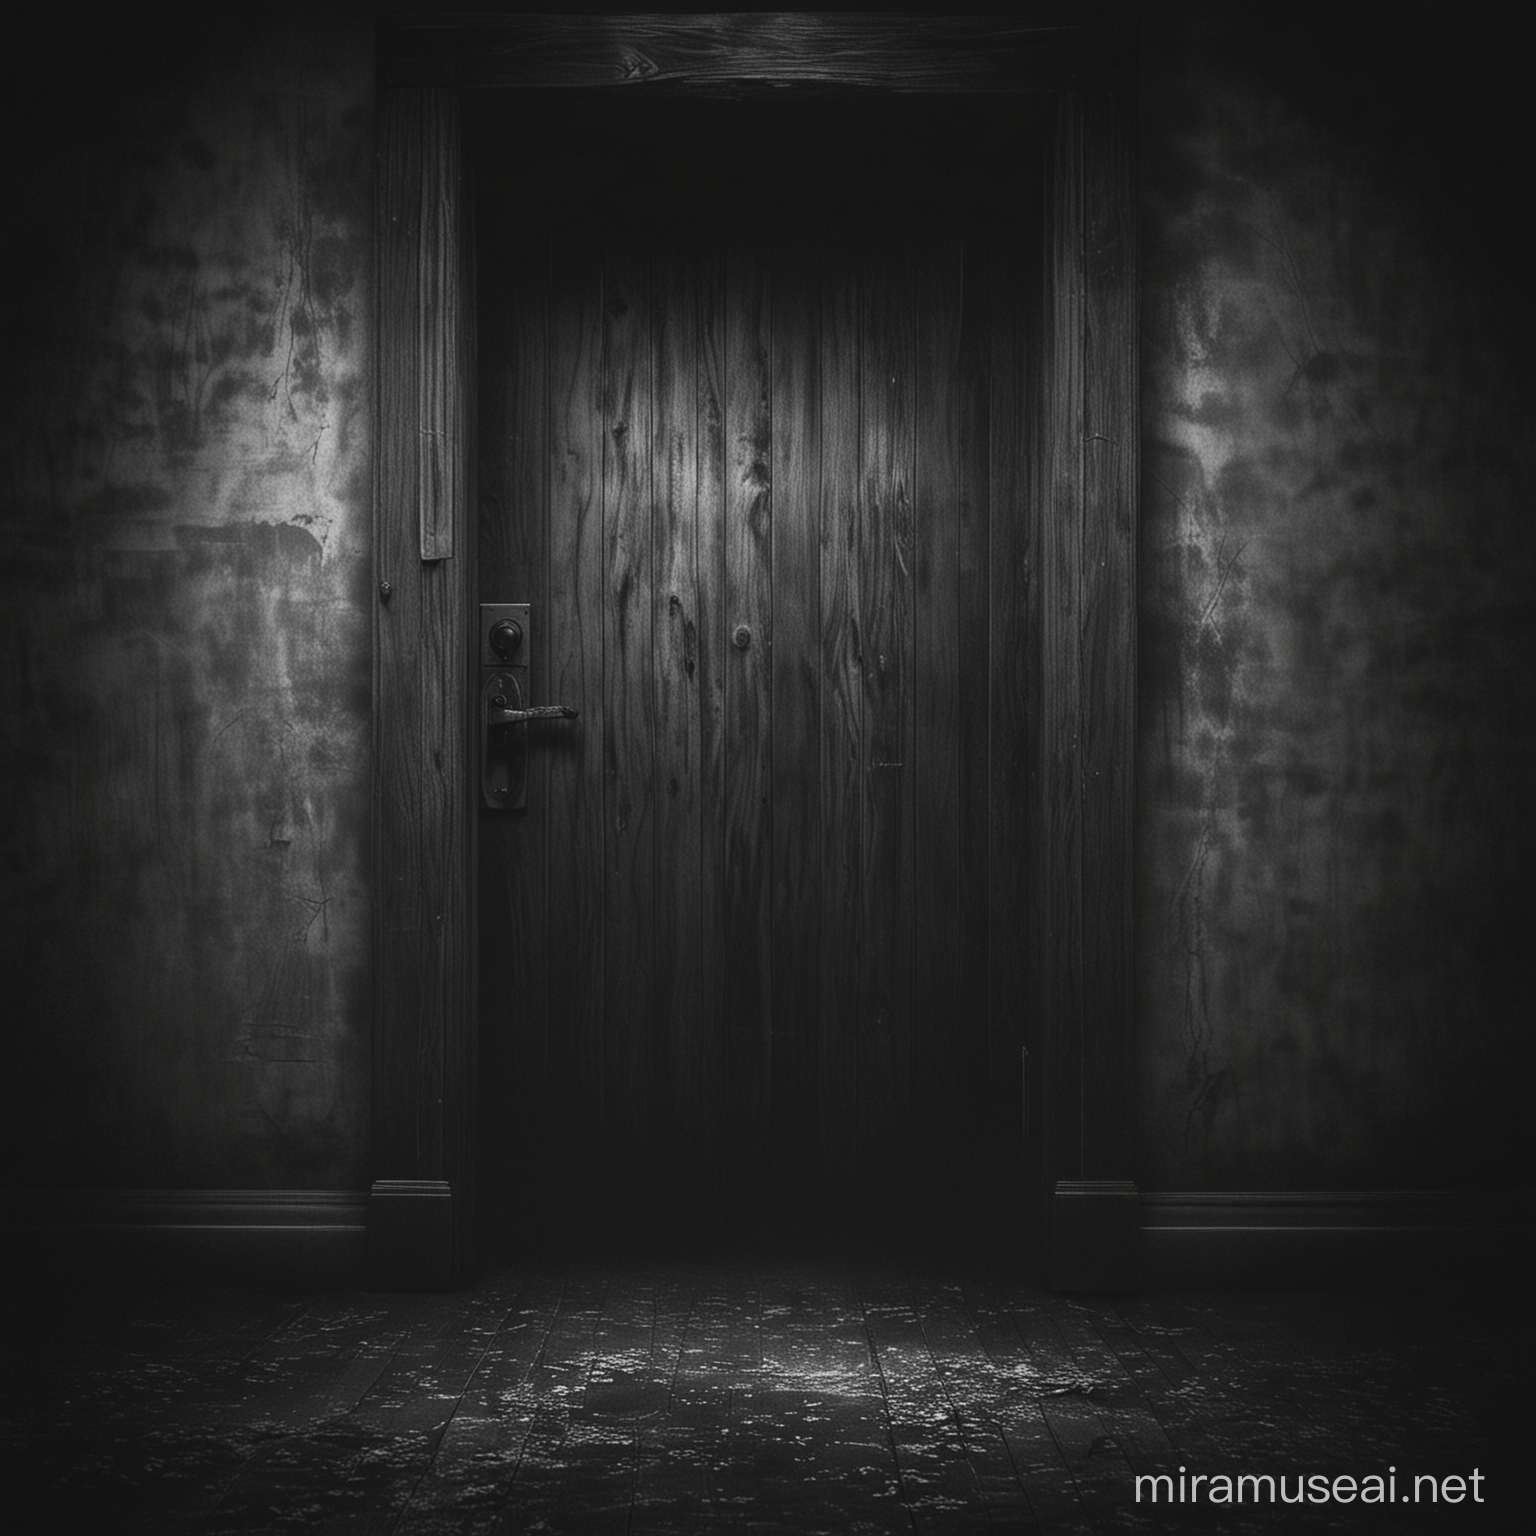 Dark supernatural shadowy door with mysterious misty supernatural figure shadowy dark eerie creepy
